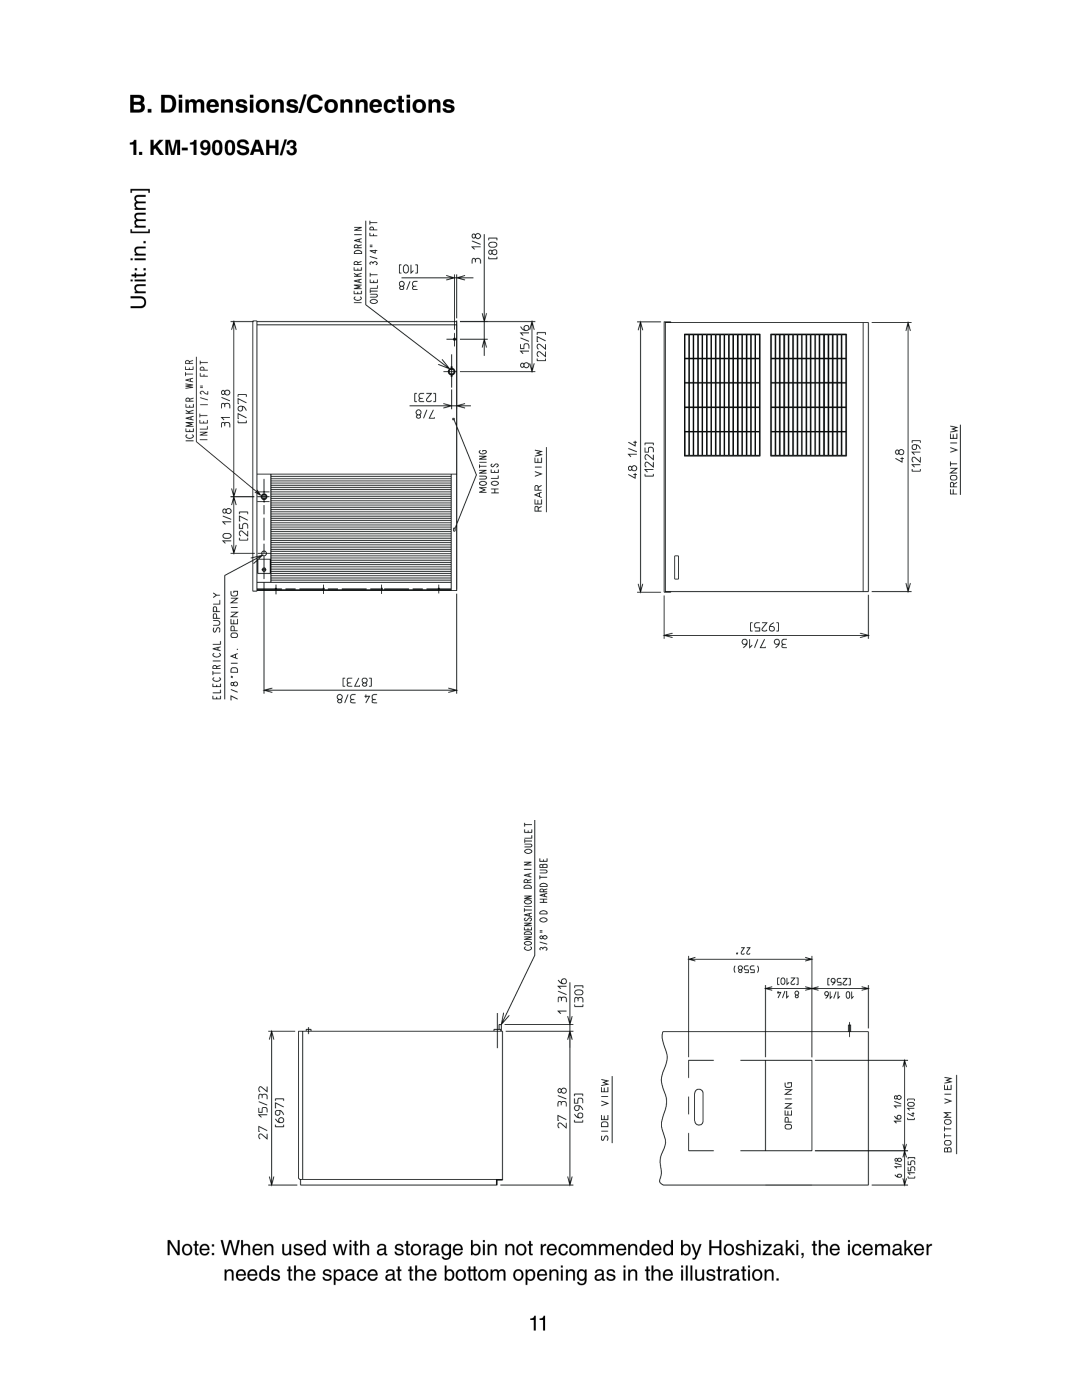 Hoshizaki KM-1900SWH/3, KM-1900SRH/3 instruction manual B. Dimensions/Connections, KM-1900SAH/3 